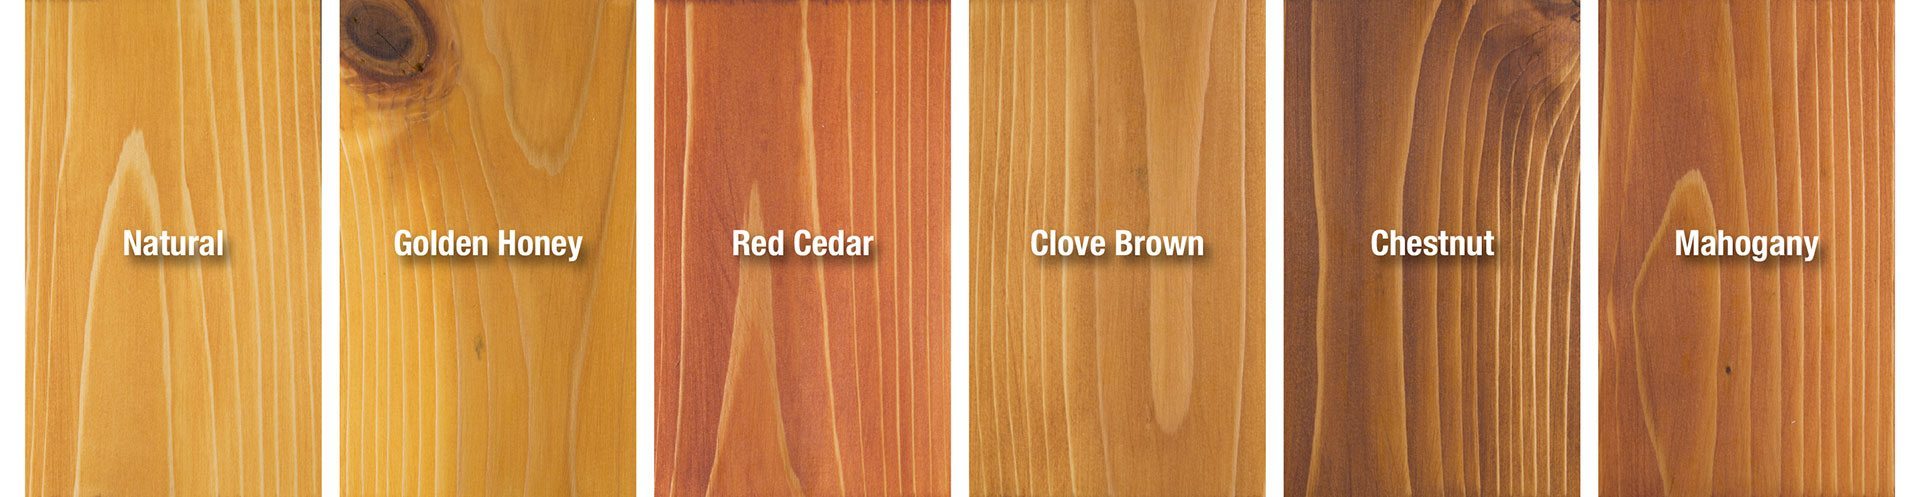 What Color is Cedar Wood 